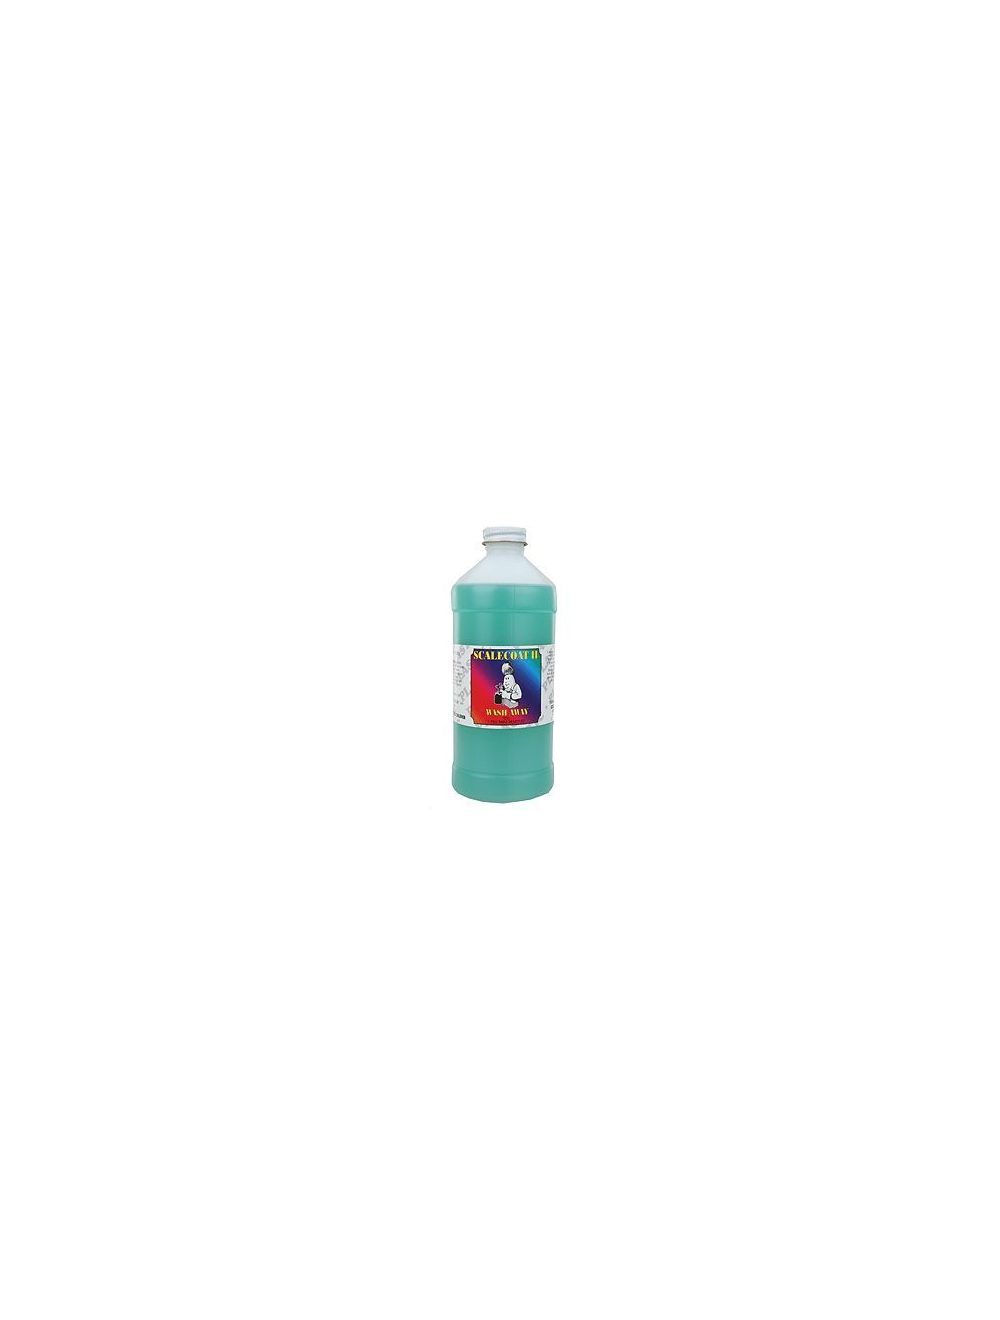 Scalecoat - Paint Stripper/Remover for Plastics - 16oz 473mL Bottle -  640-10568